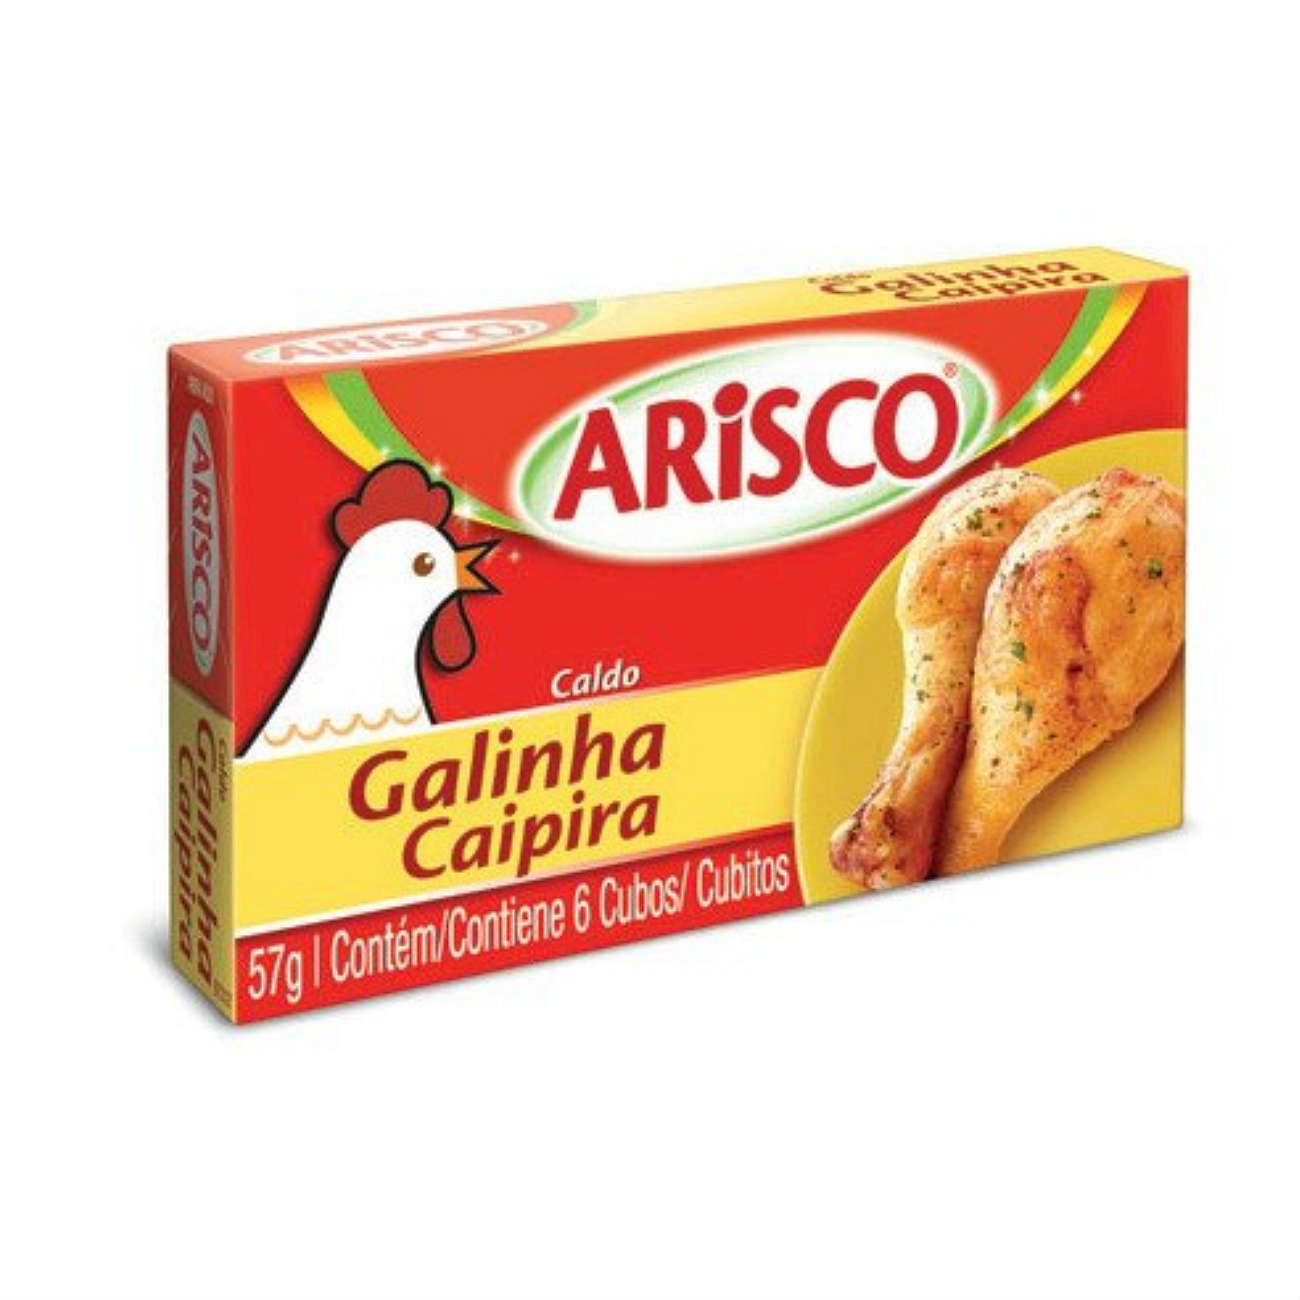 CALDO ARISCO 57G GALINHA CAIPIRA CART